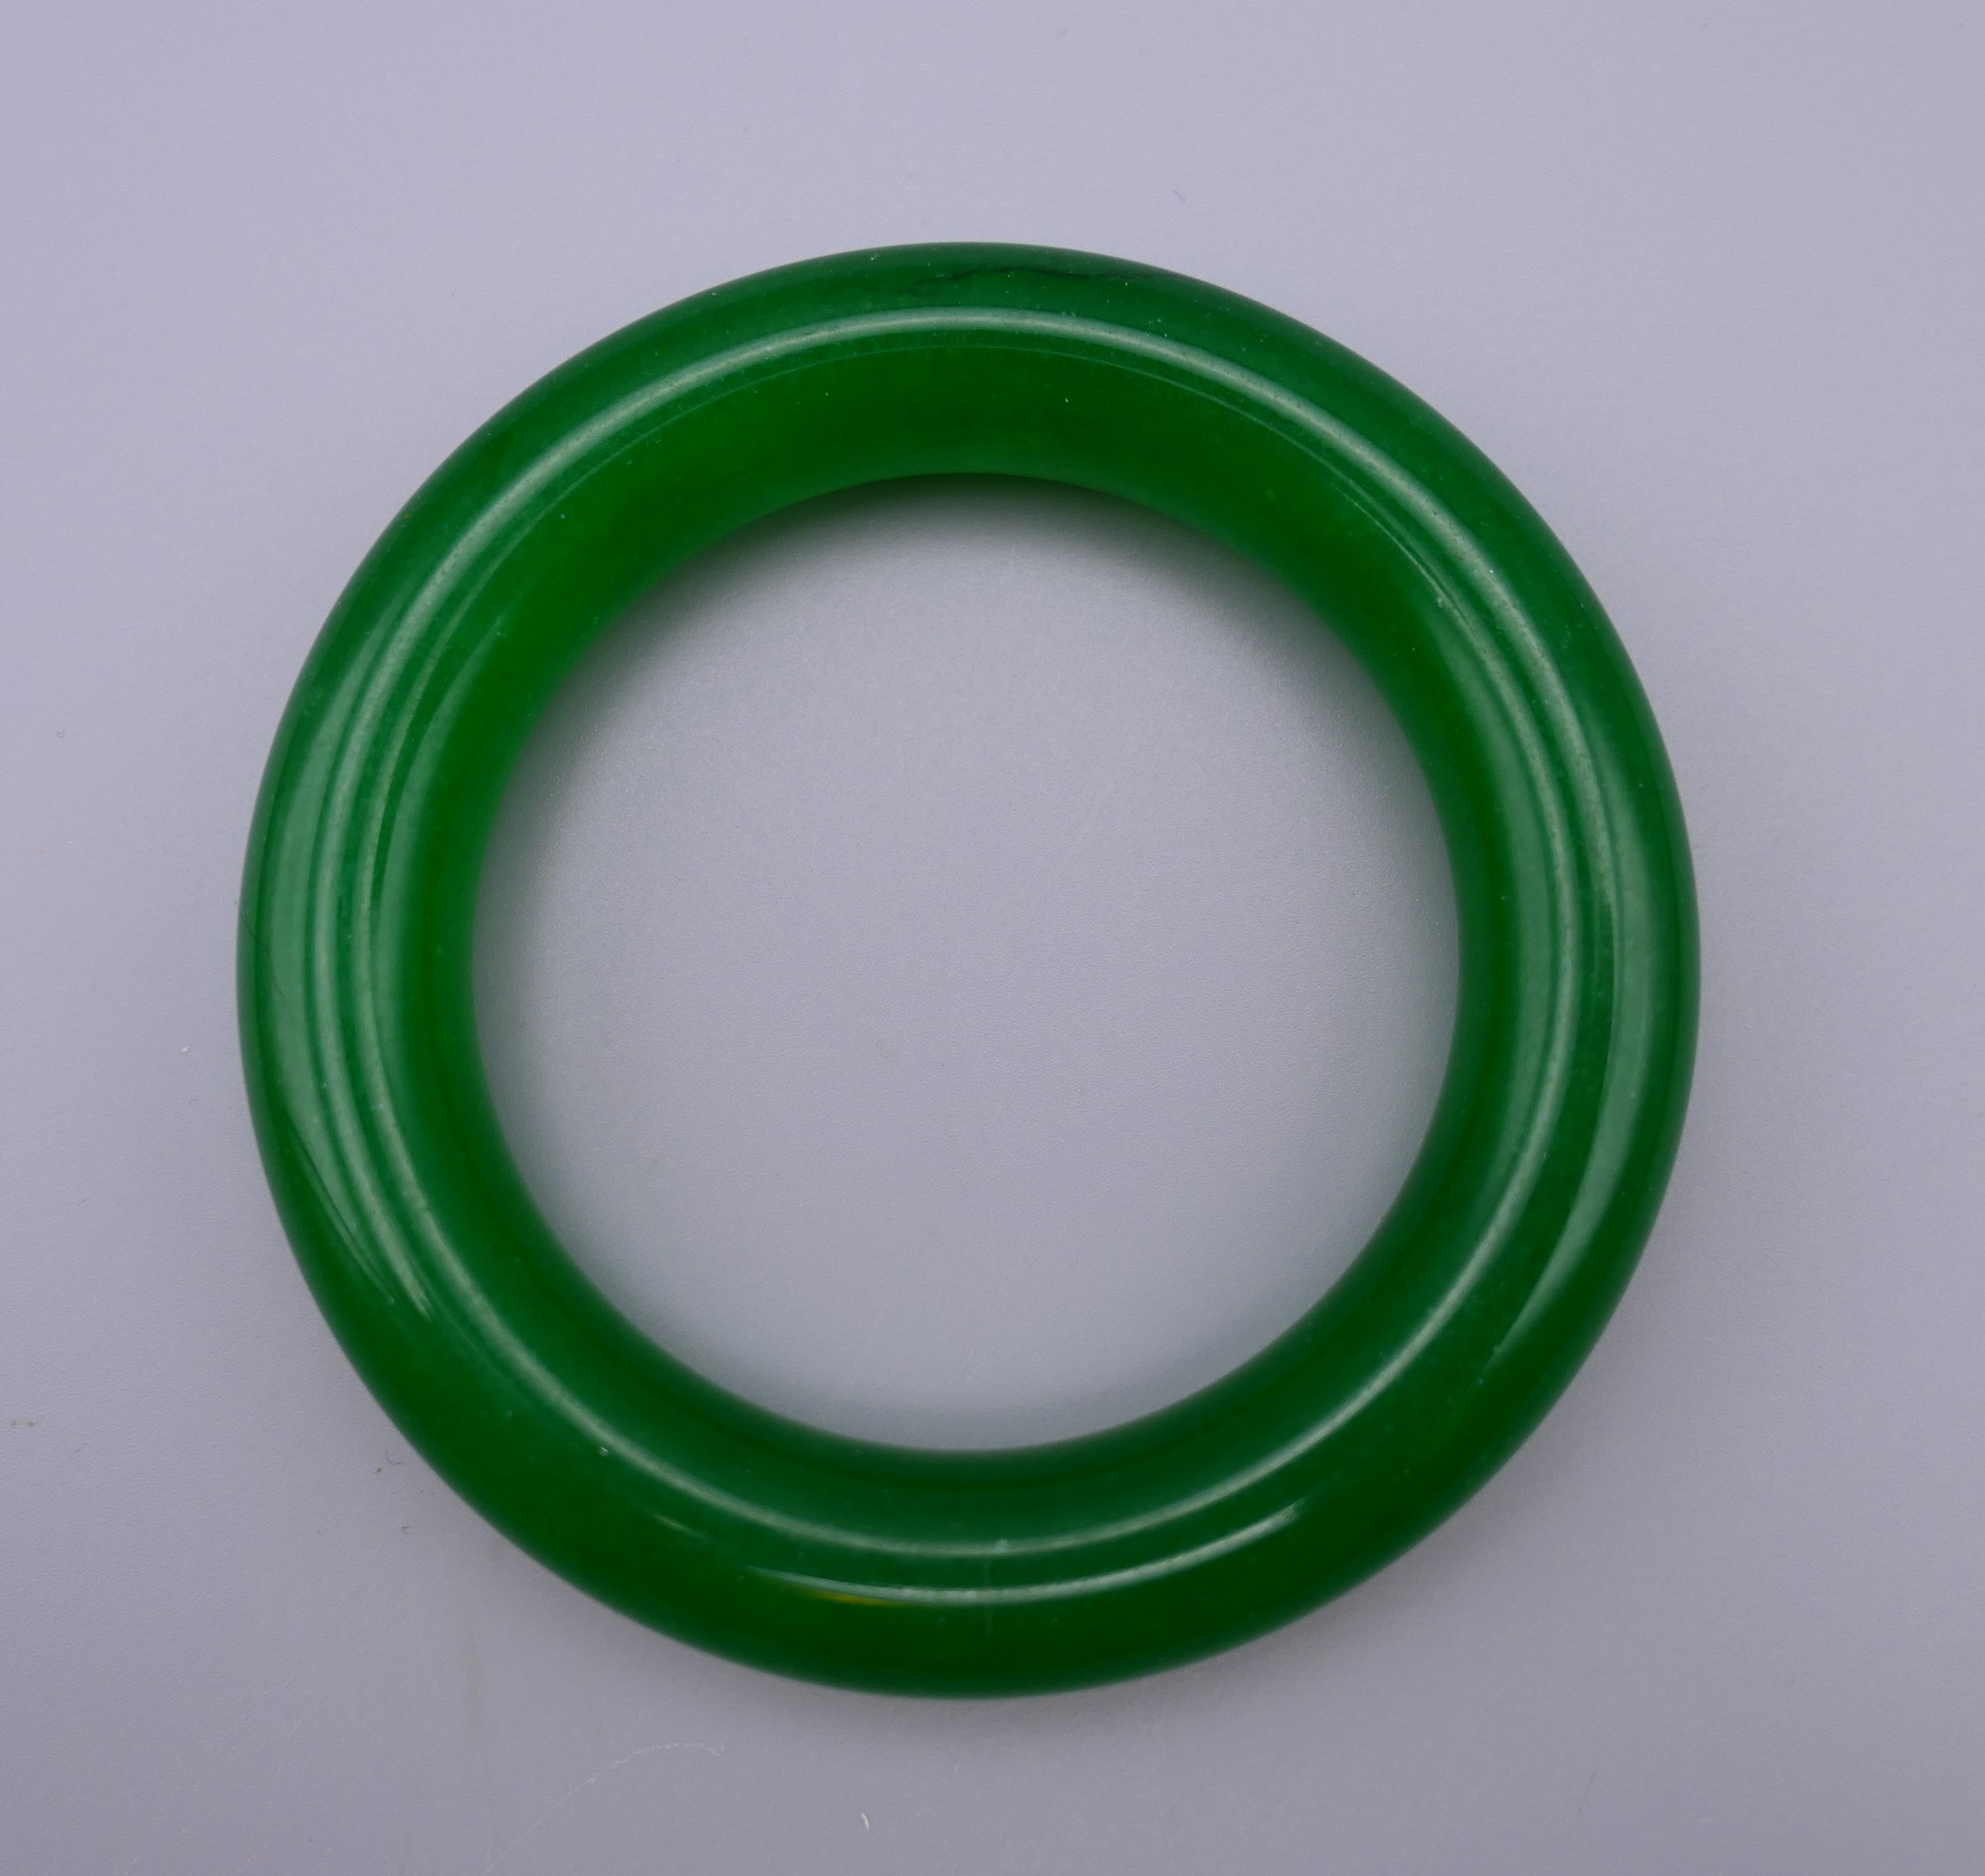 An apple green jade bangle. 8.5 cm diameter.